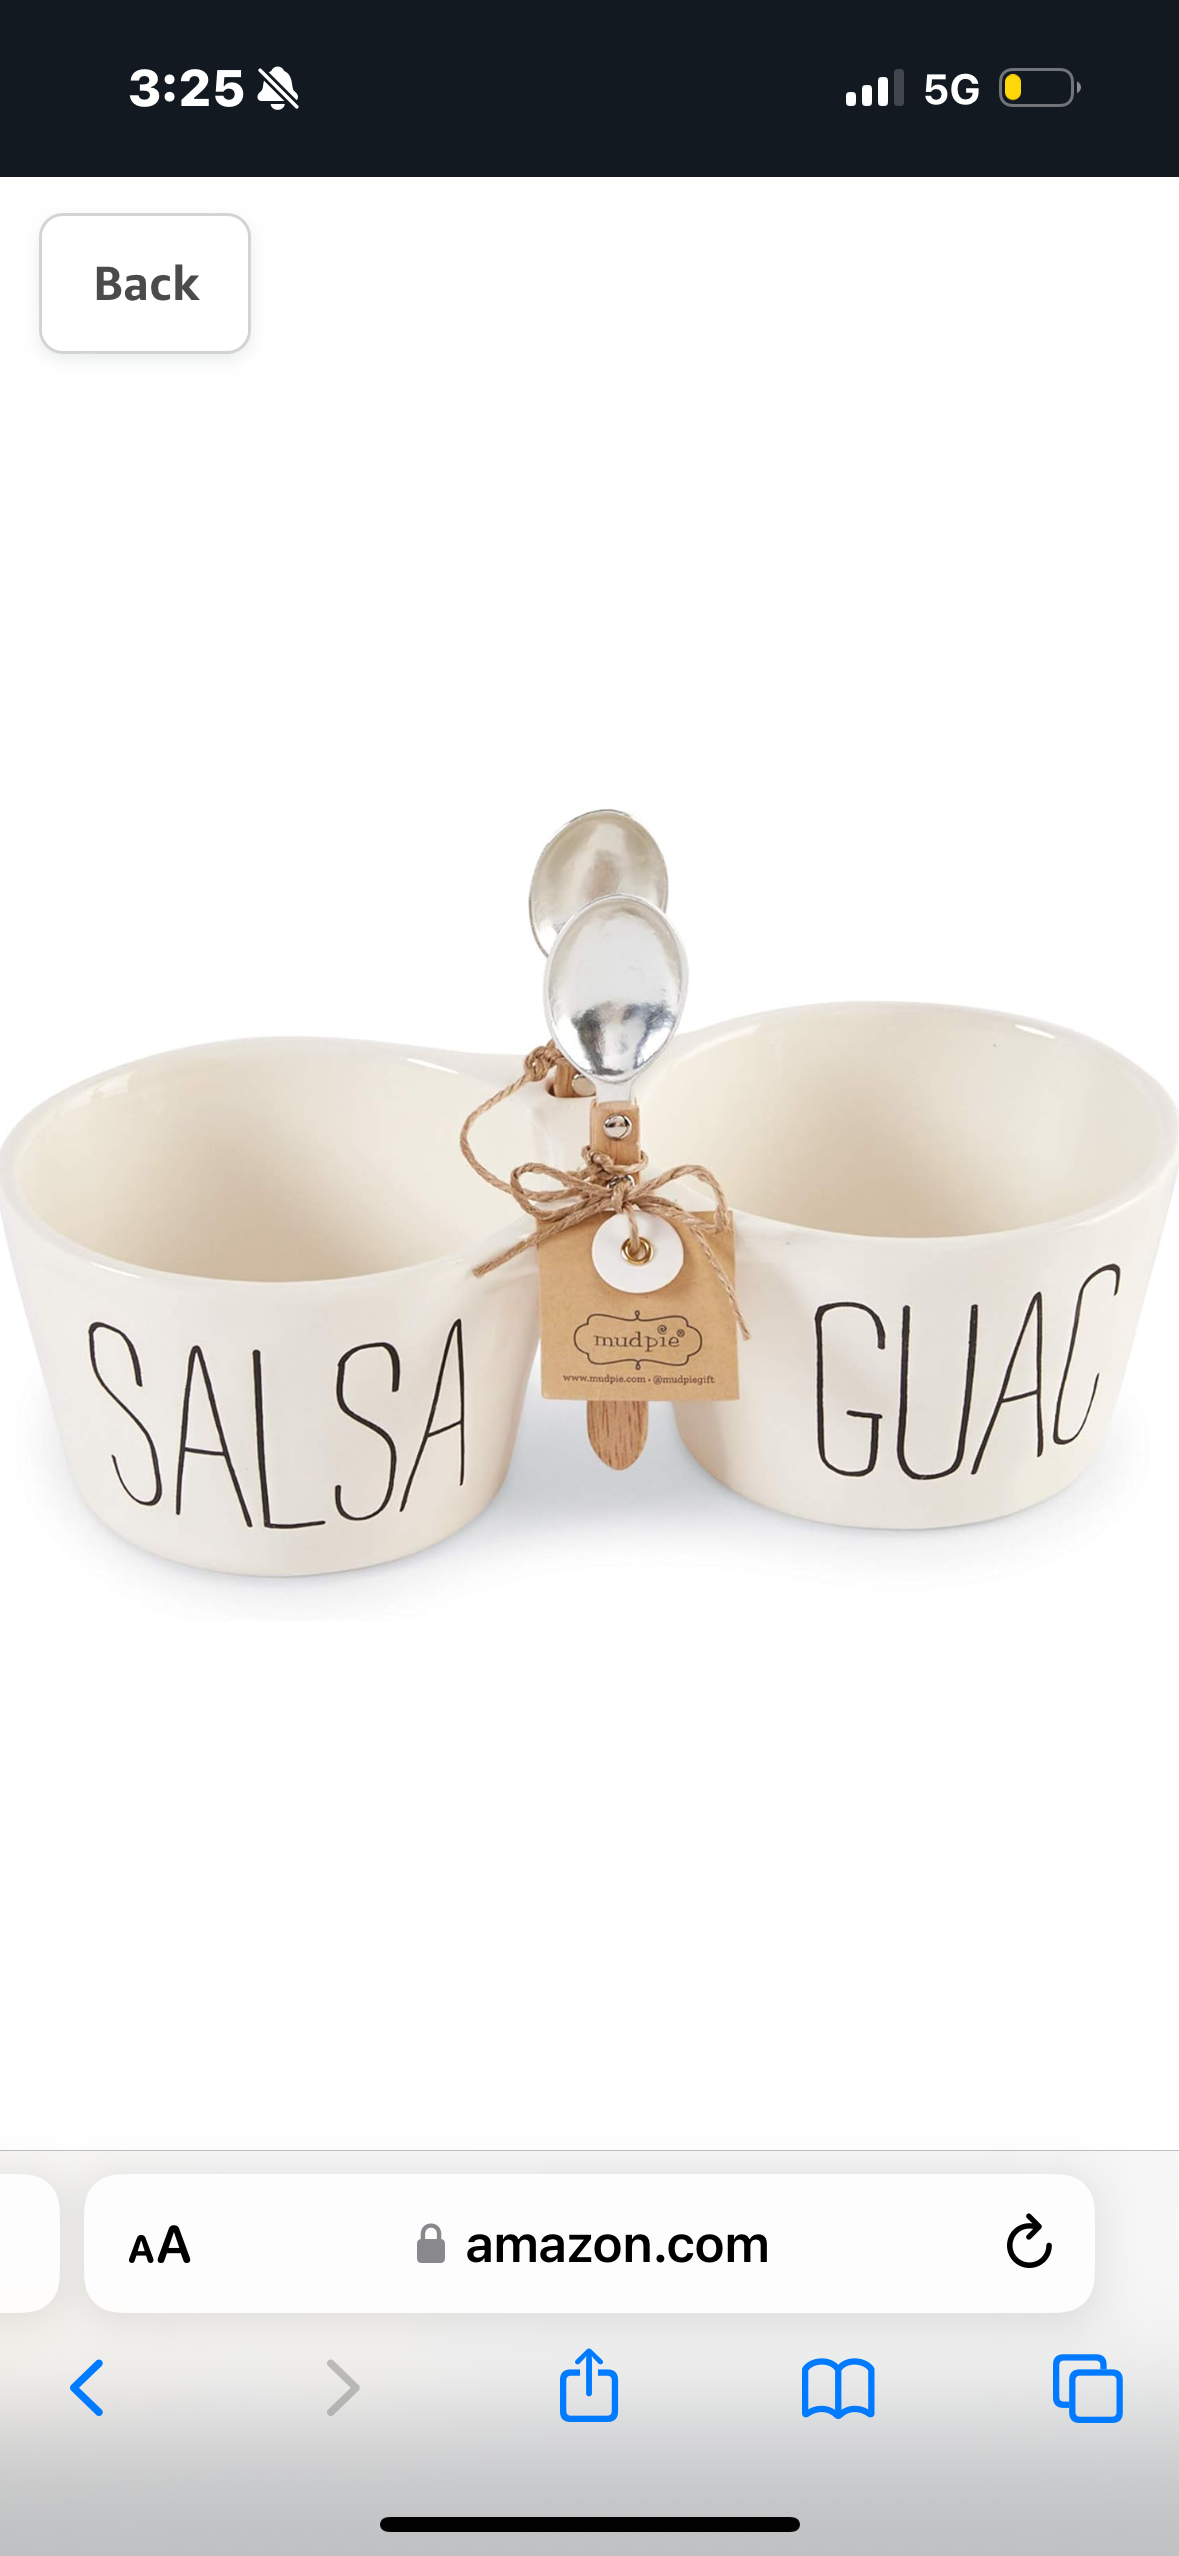 Salsa - Guac Bowl